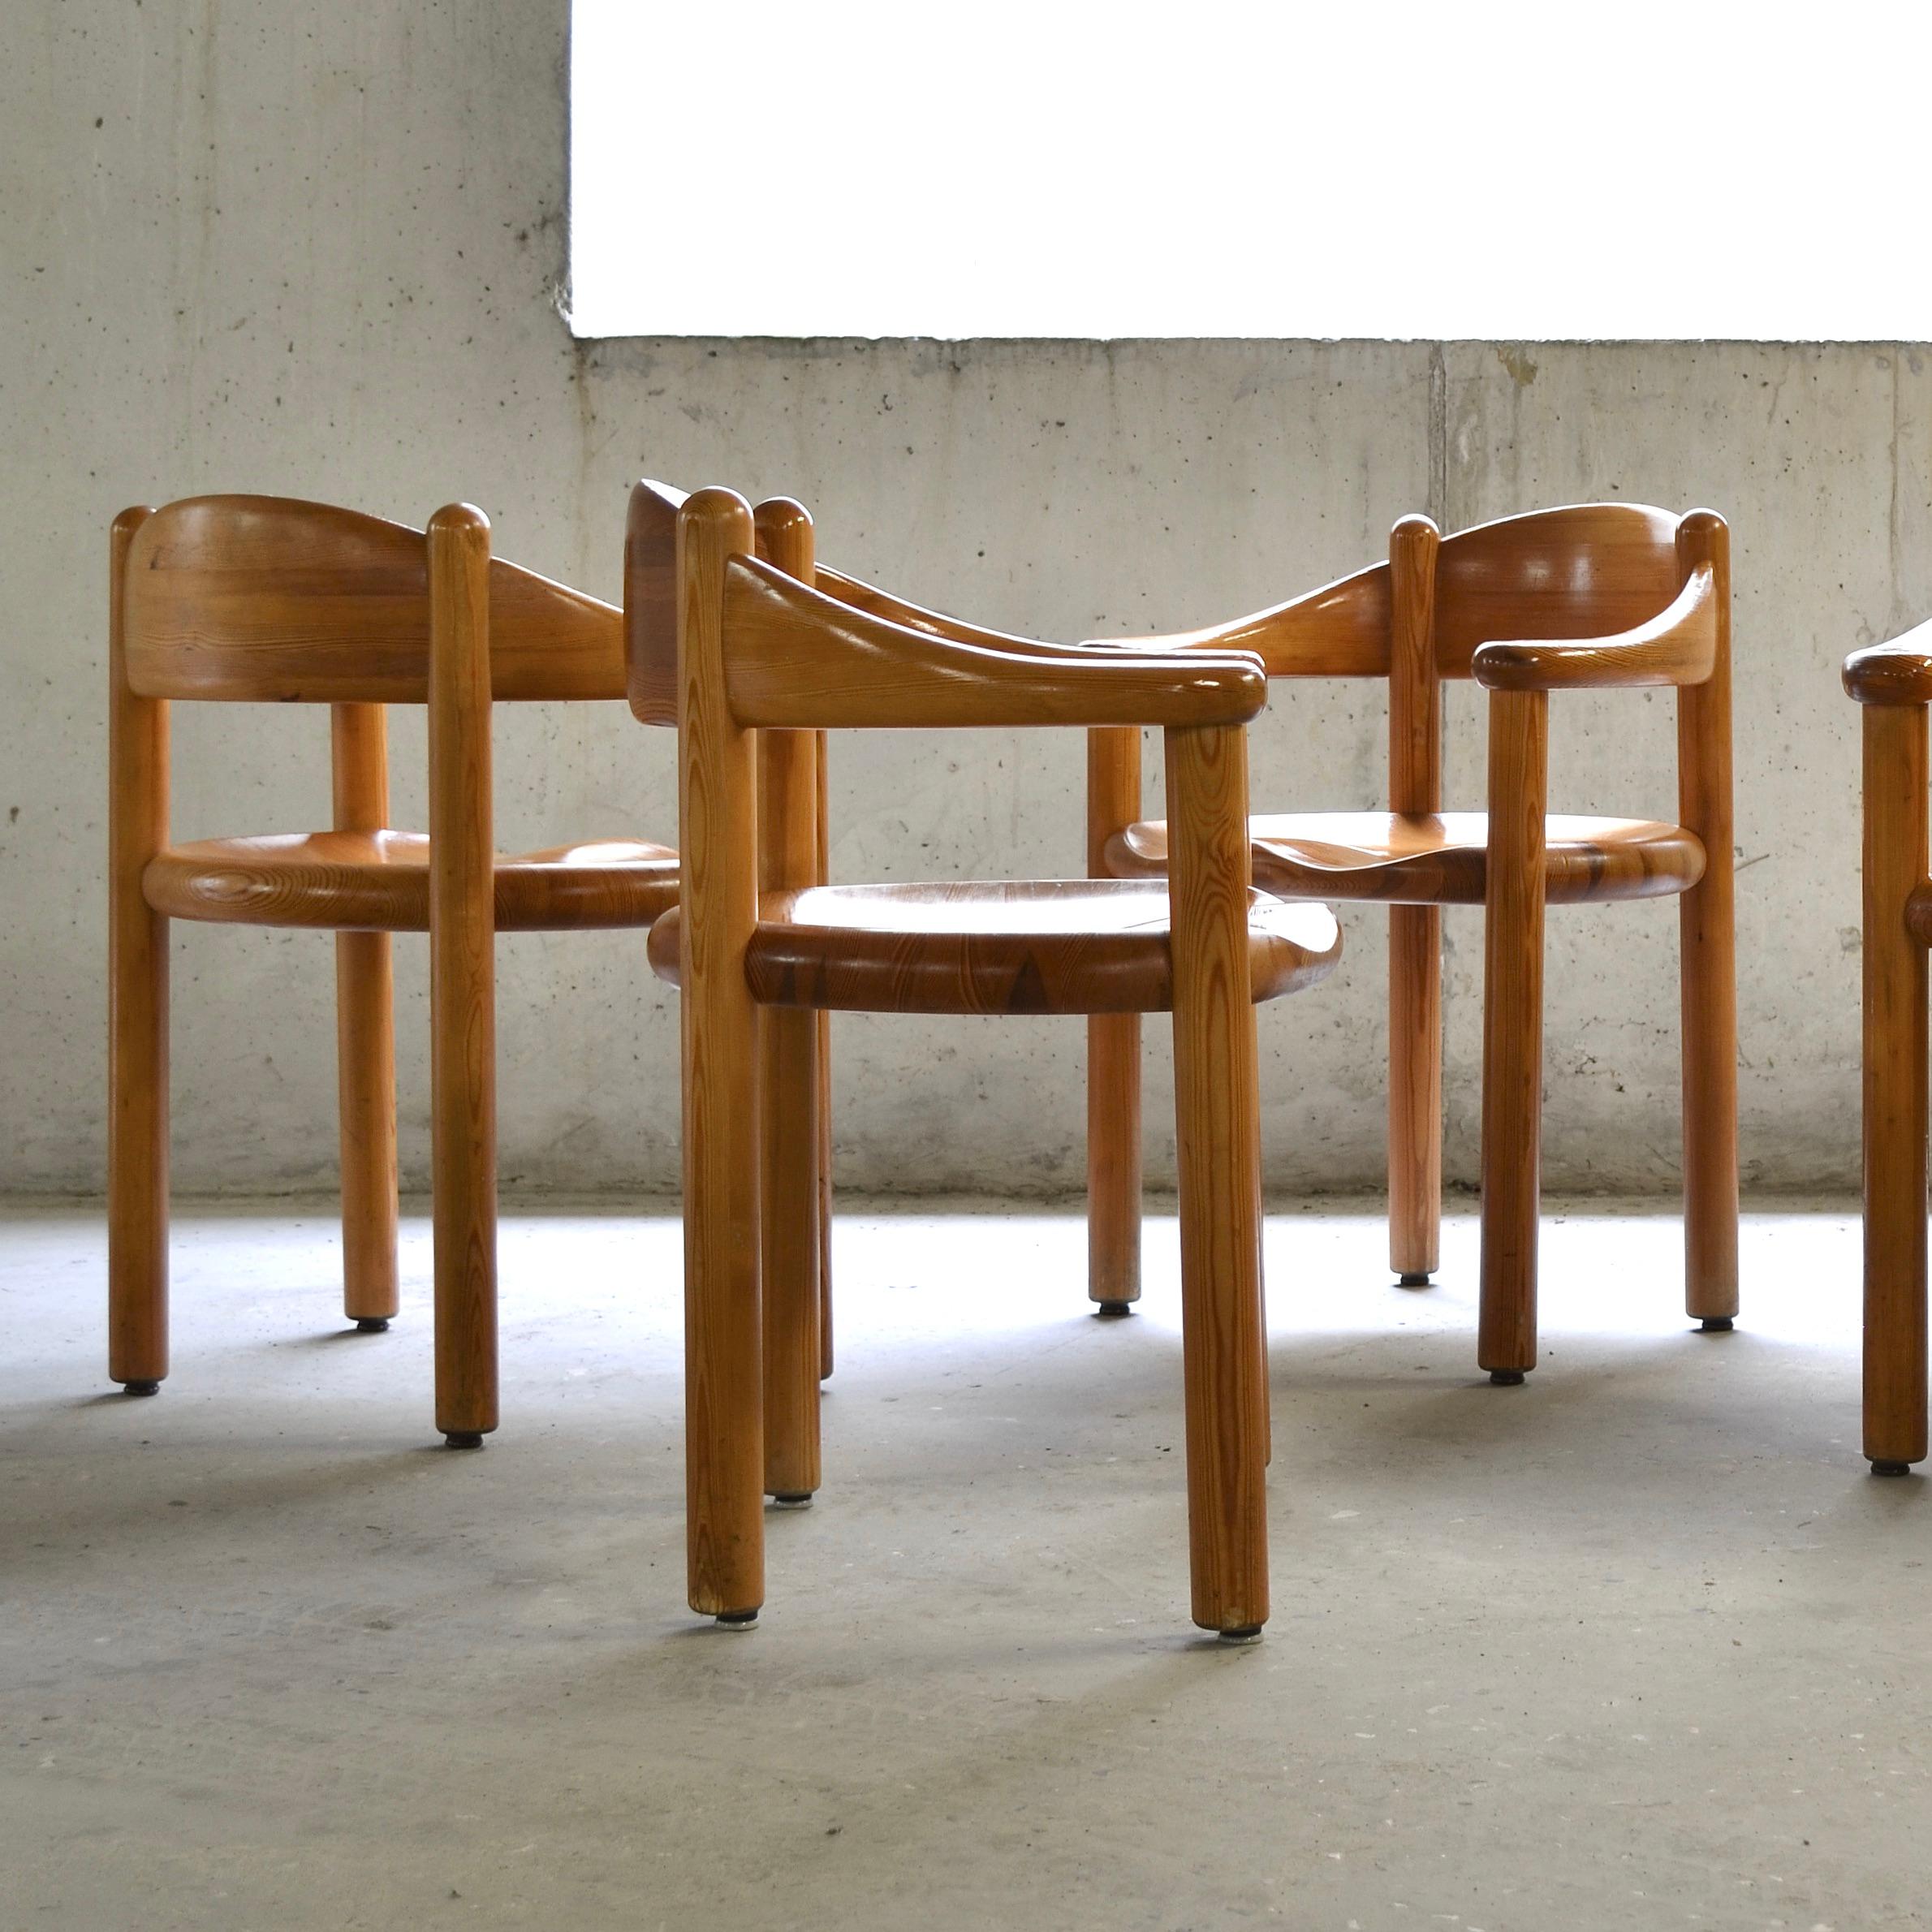 Danish Pine Chairs, Rainer Daumiller, Denmark, 1970's For Sale